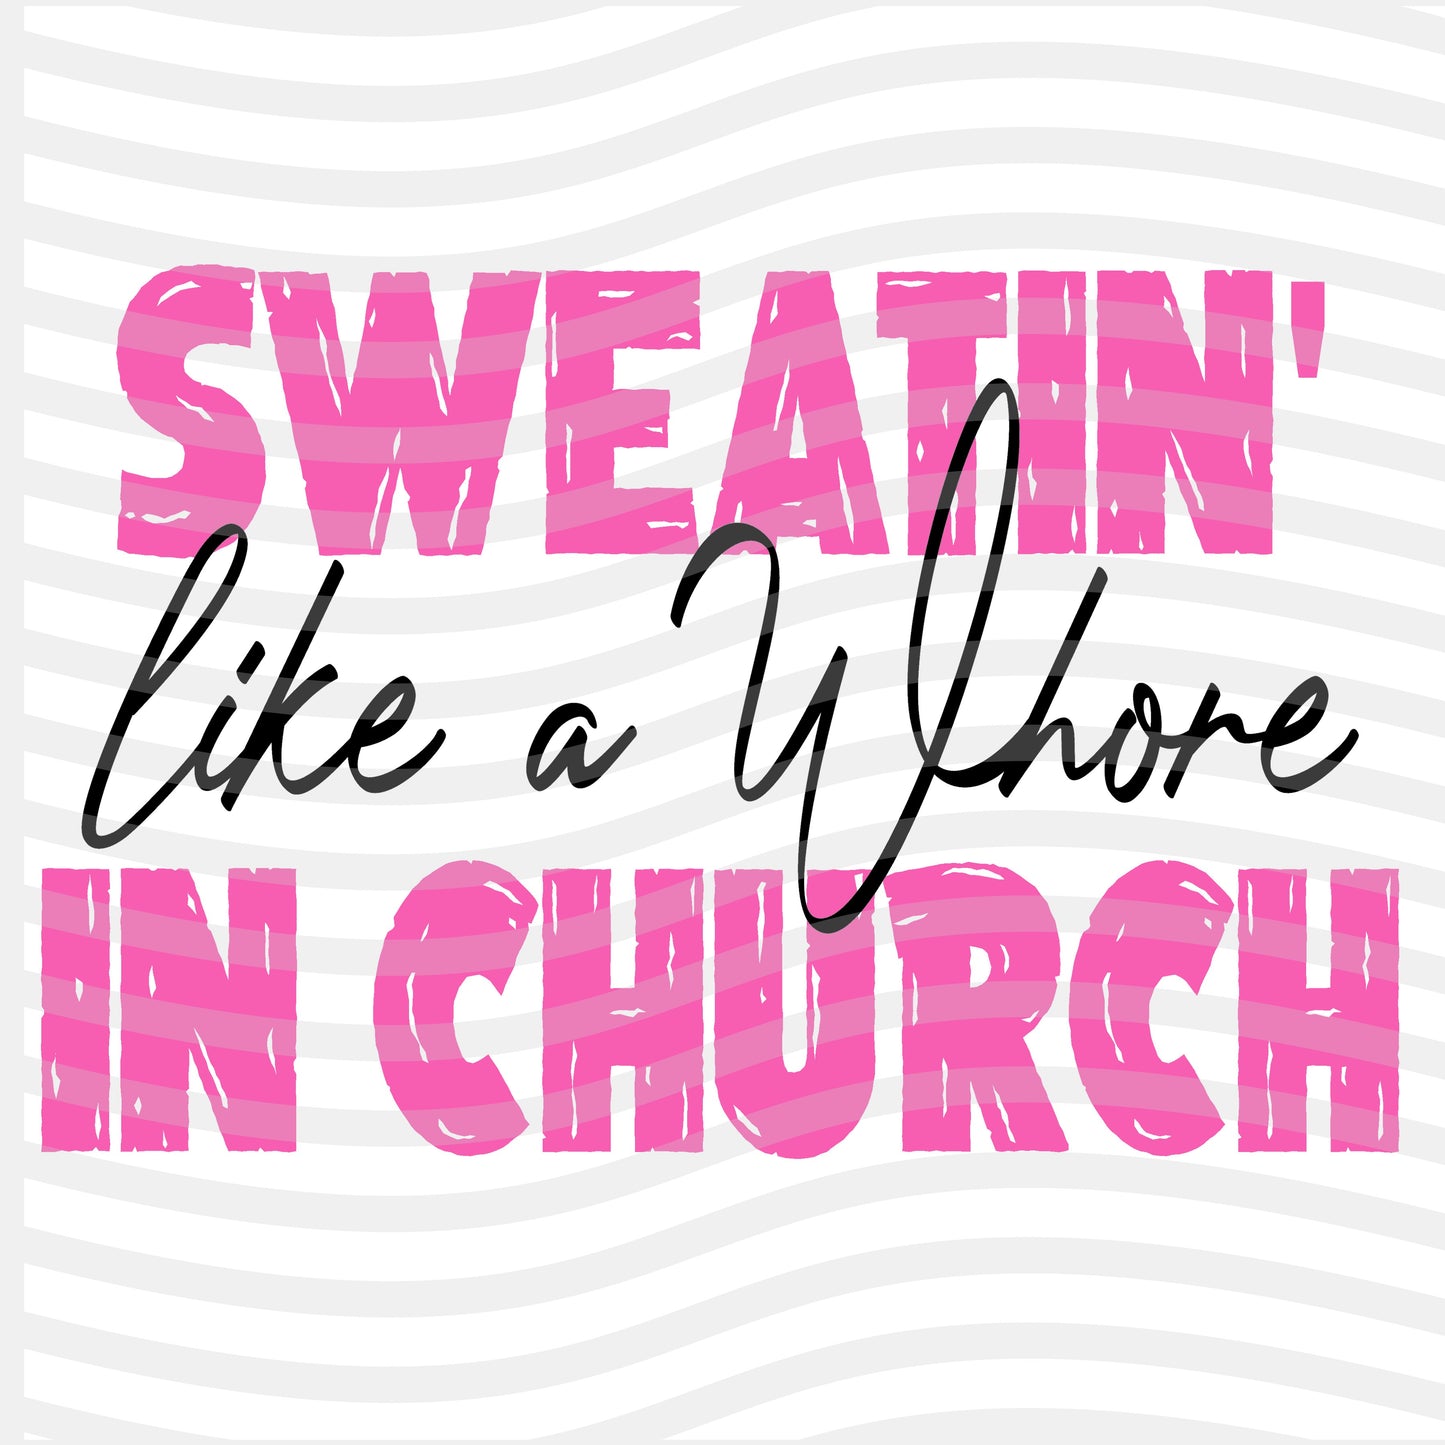 Whore in Church